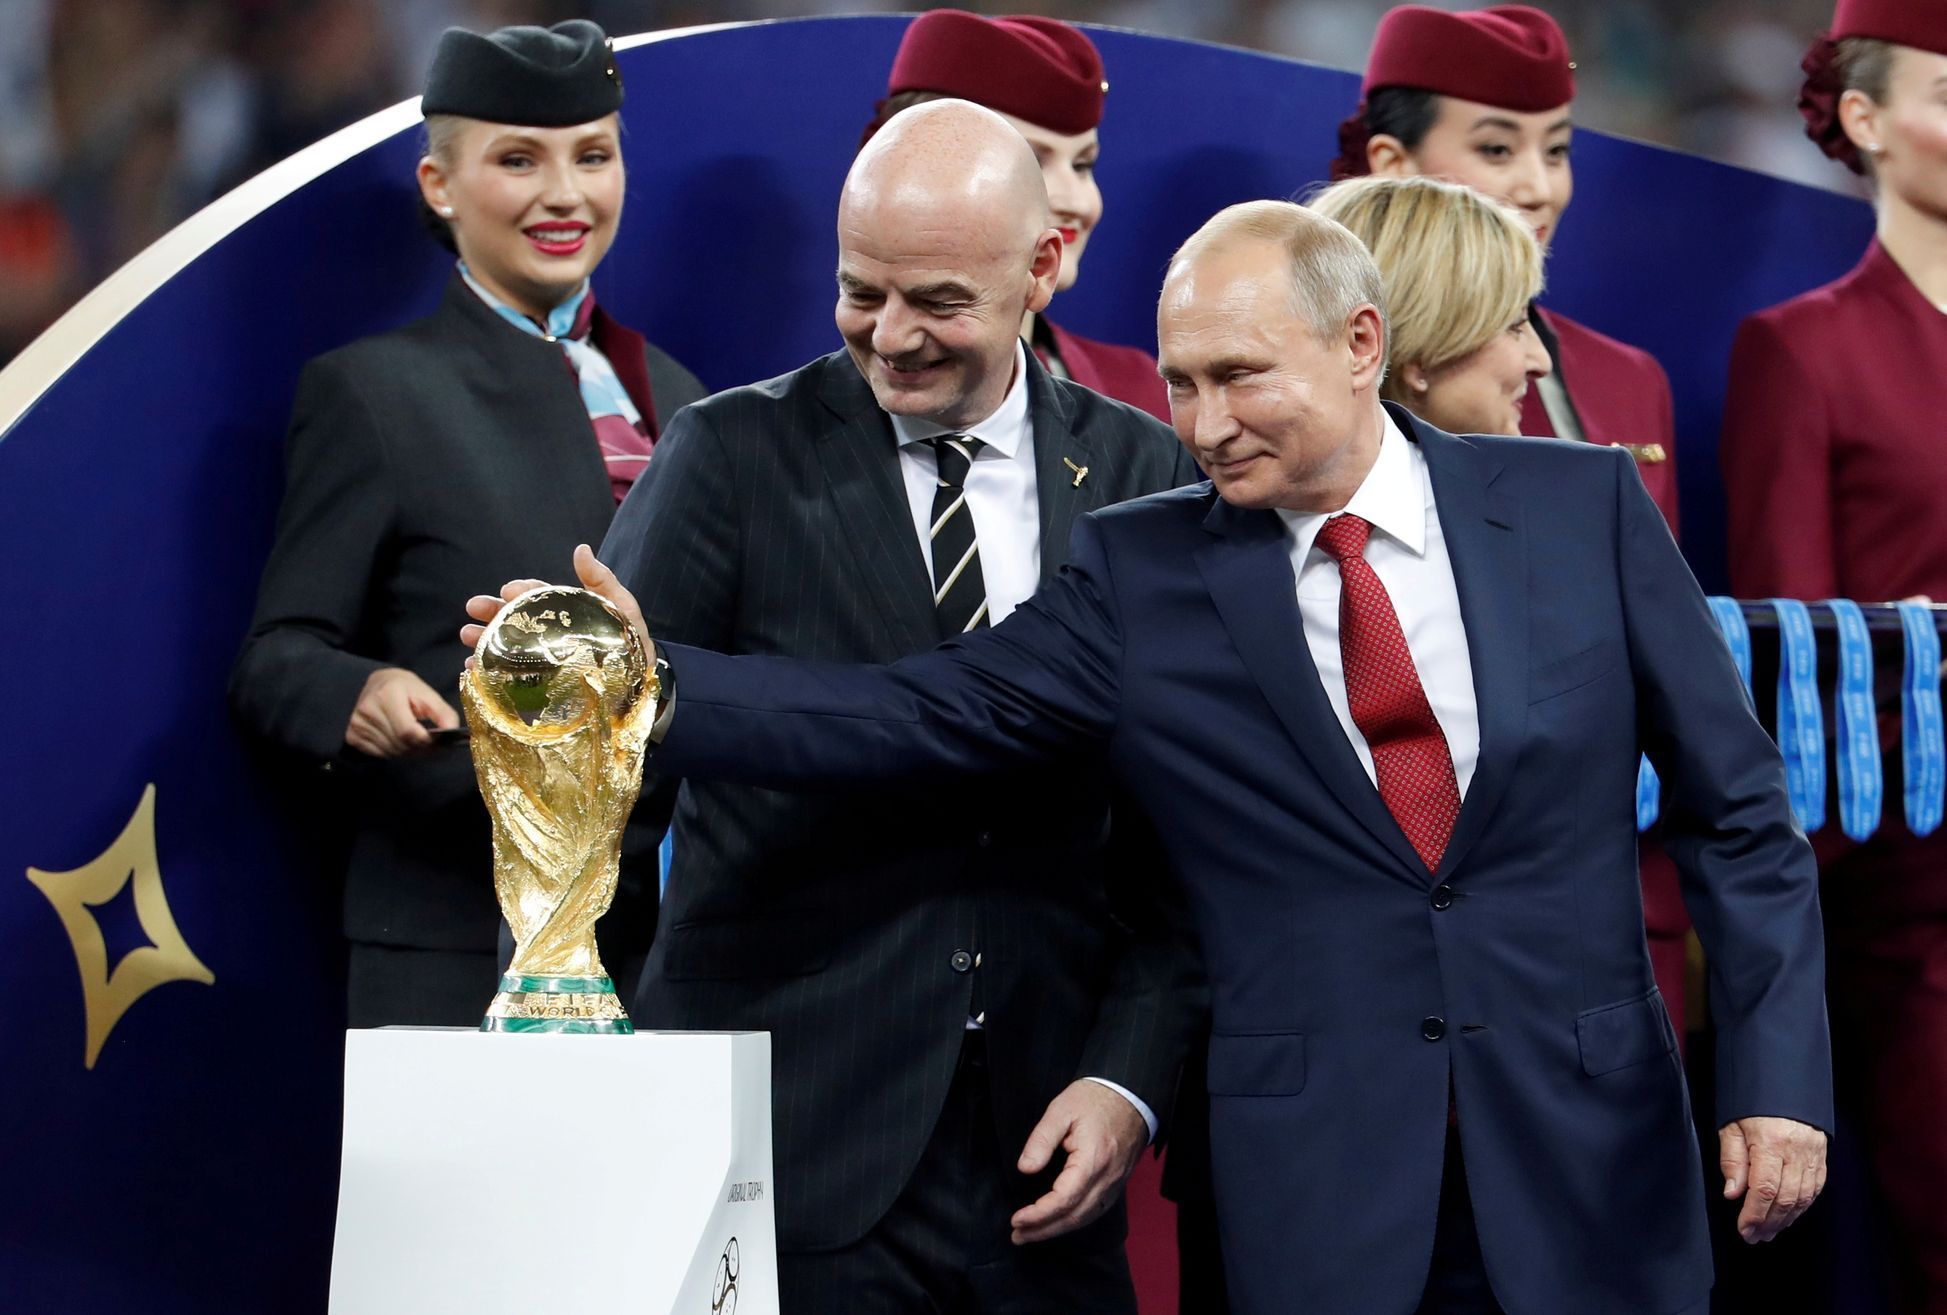 fotbal, MS 2018, finále, Vladimir Putin